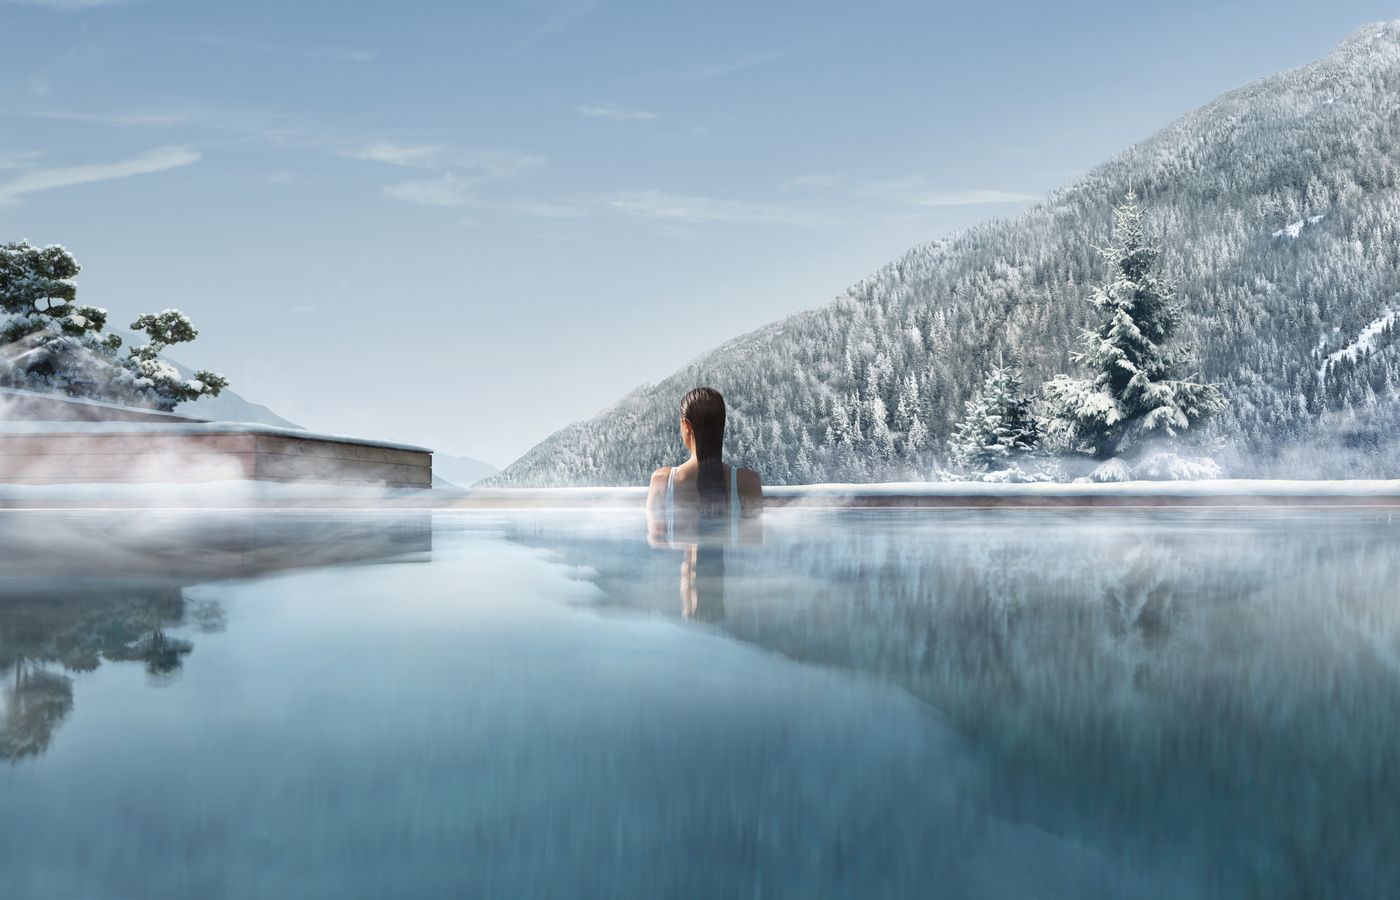 Trip Croatia - FitReisen - Lefay Resort & Spa Dolomiti in Pinzolo buche jetzt Deinen Wellness & Beauty Urlaub im Lefay Resort & Spa Dolomiti in der Region Südtirol, in Italien günstig bei uns!